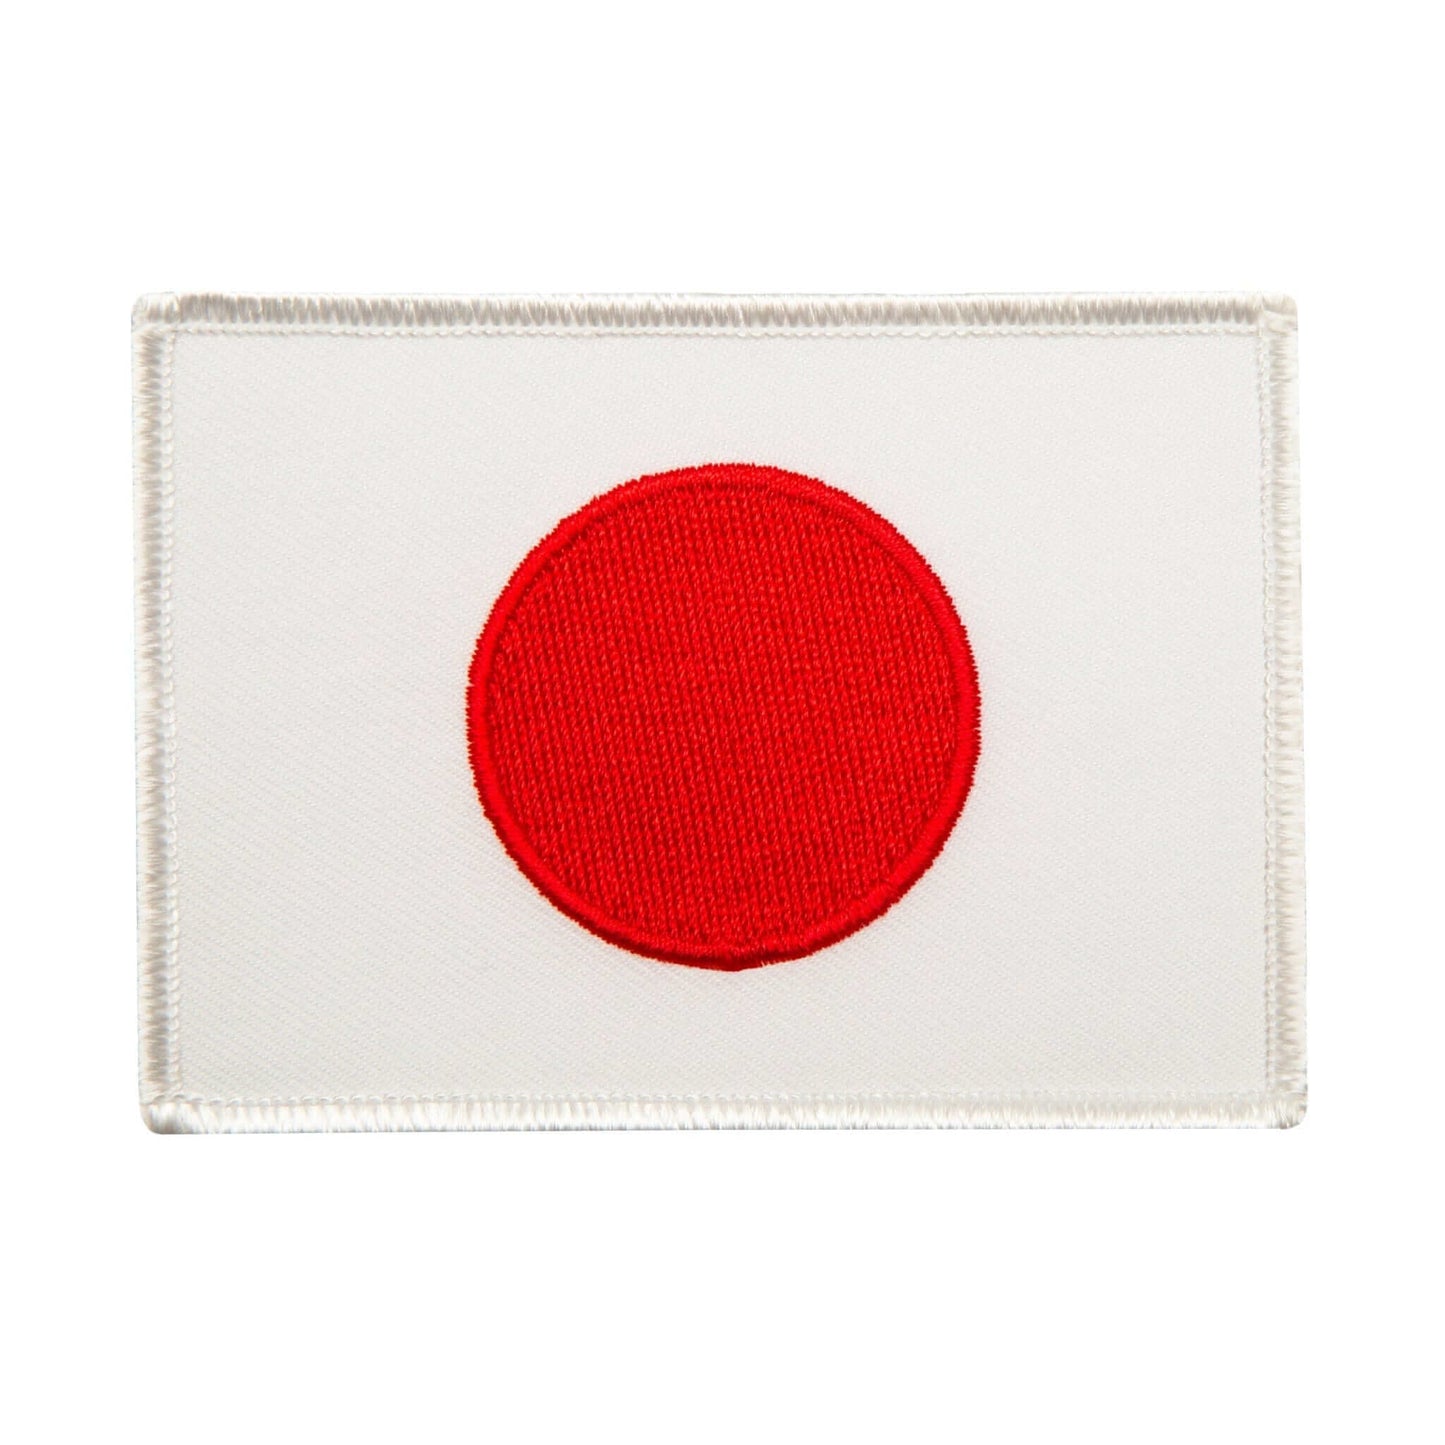 EclipseMartialArtsSupplies sporting goods Japan Flag Patch Martial Arts Uniform Patch